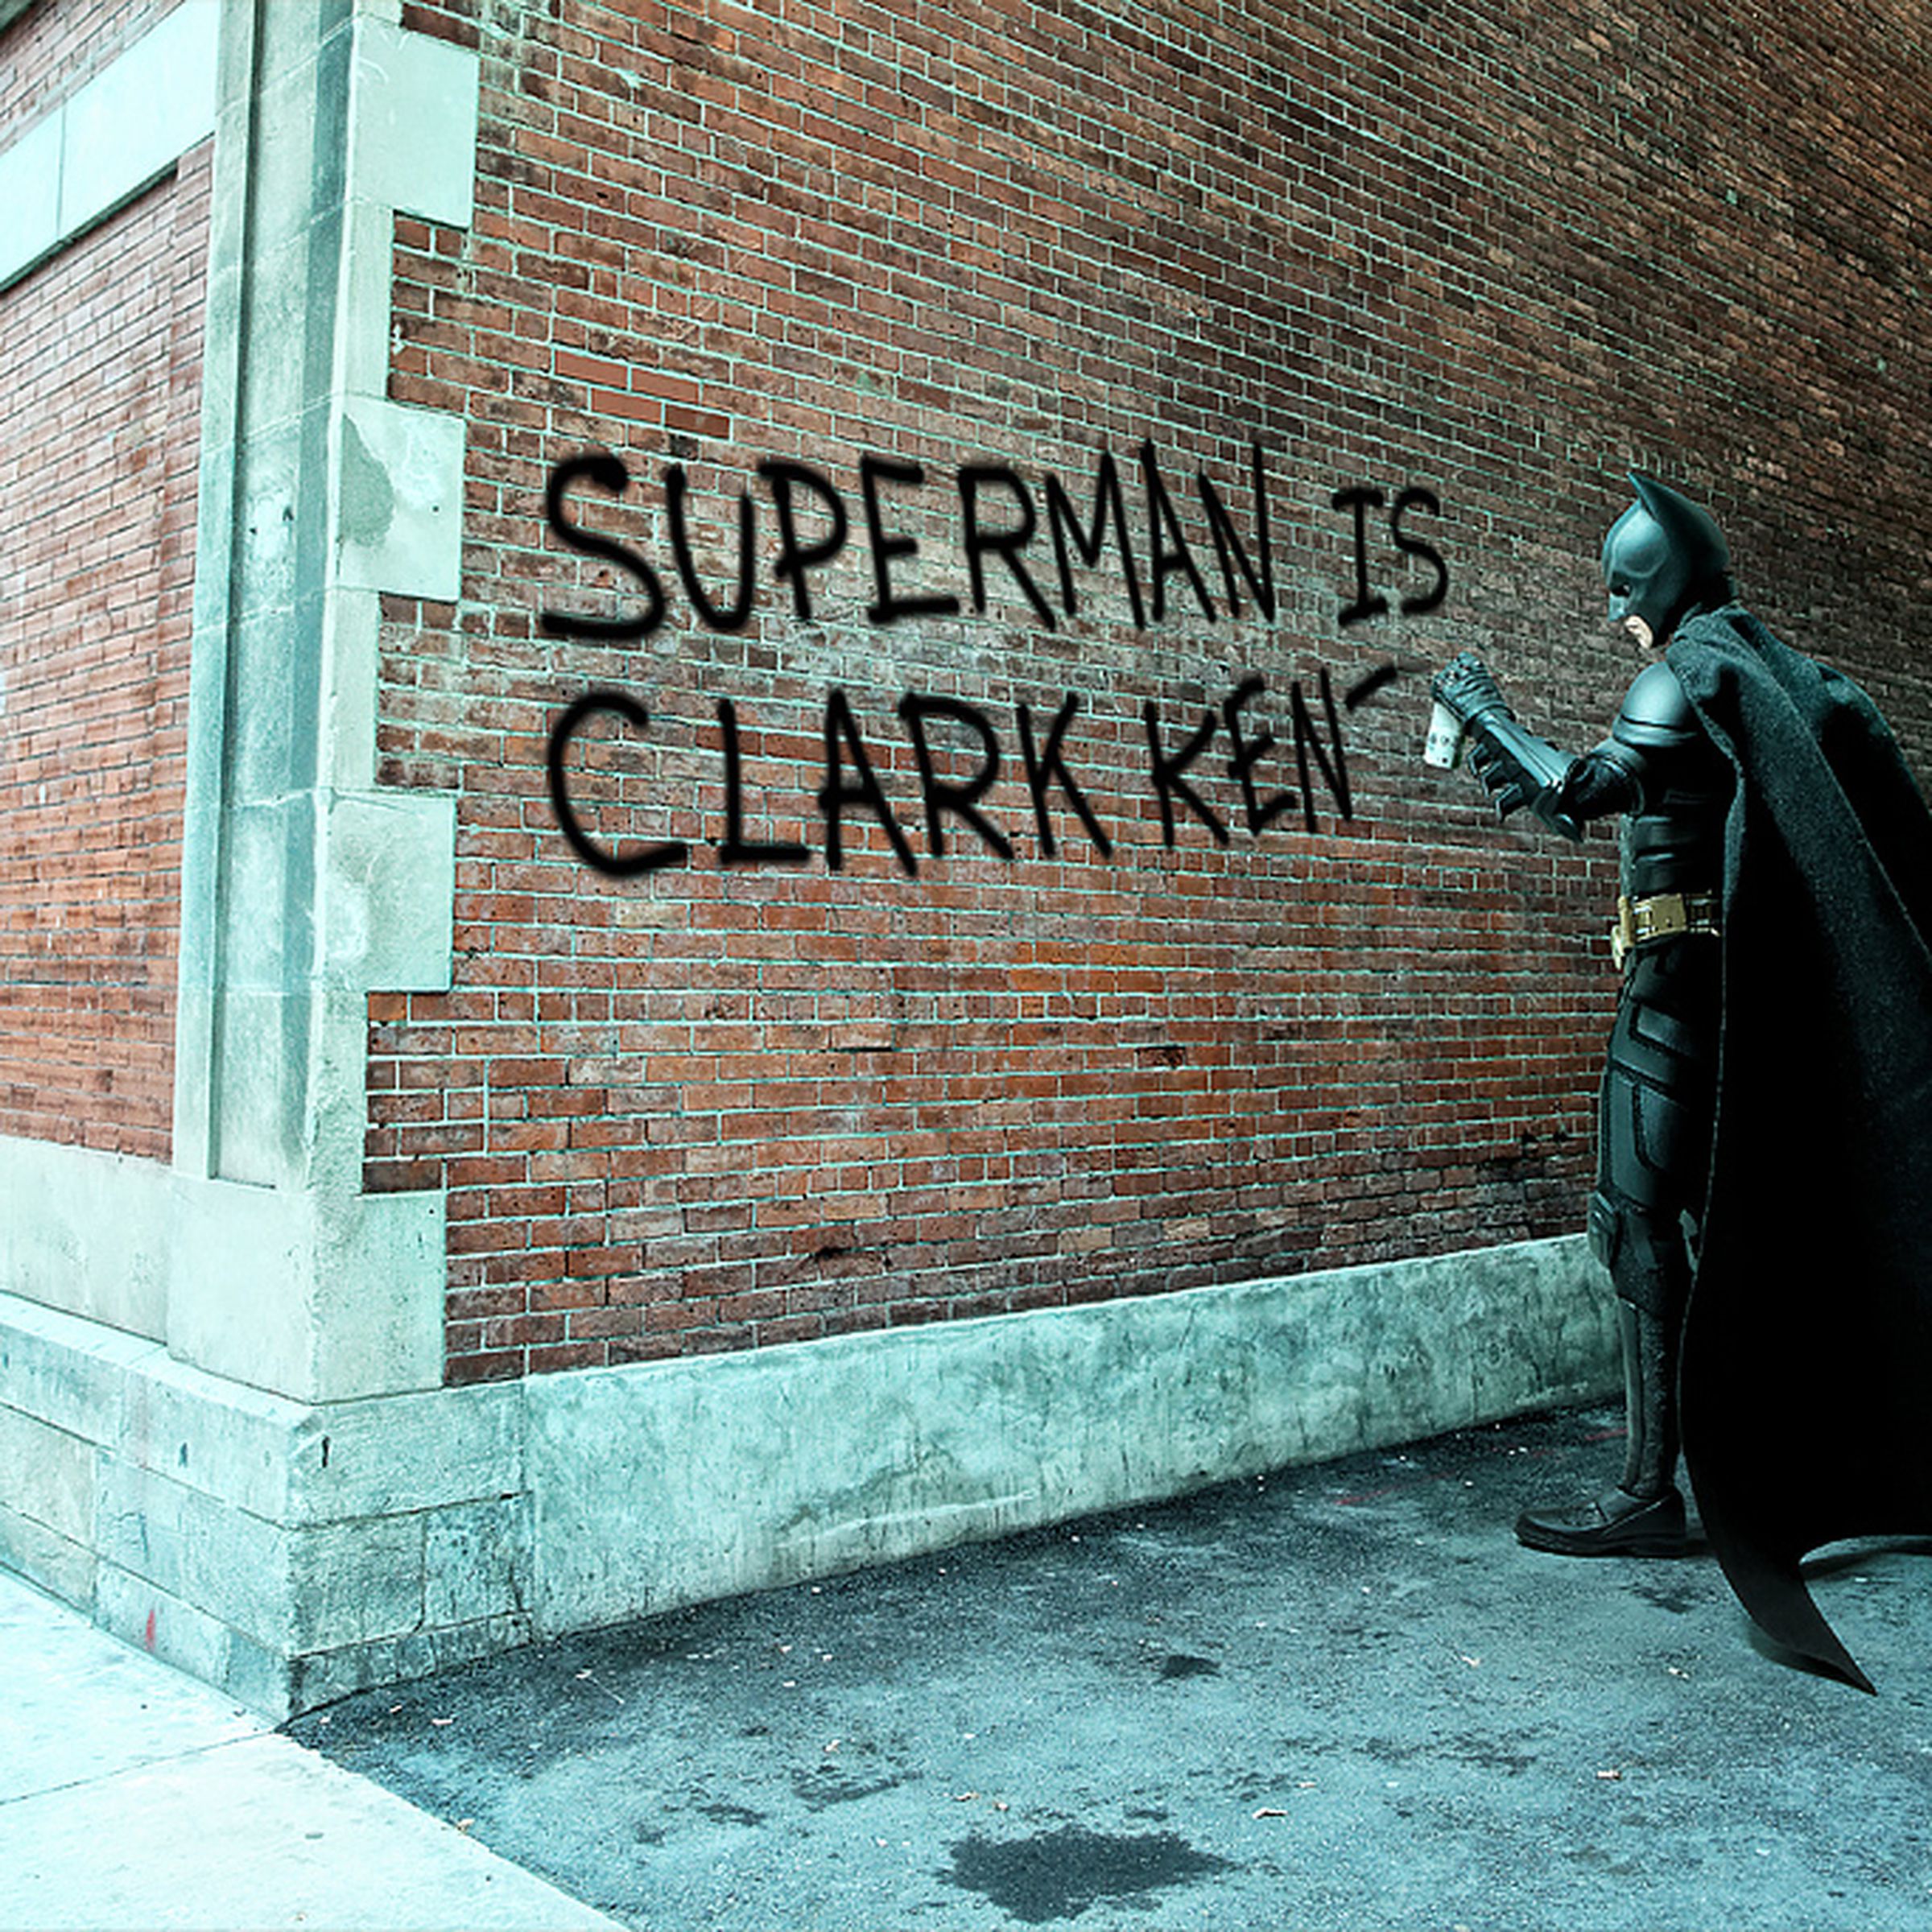 Batman leaves a graffiti message